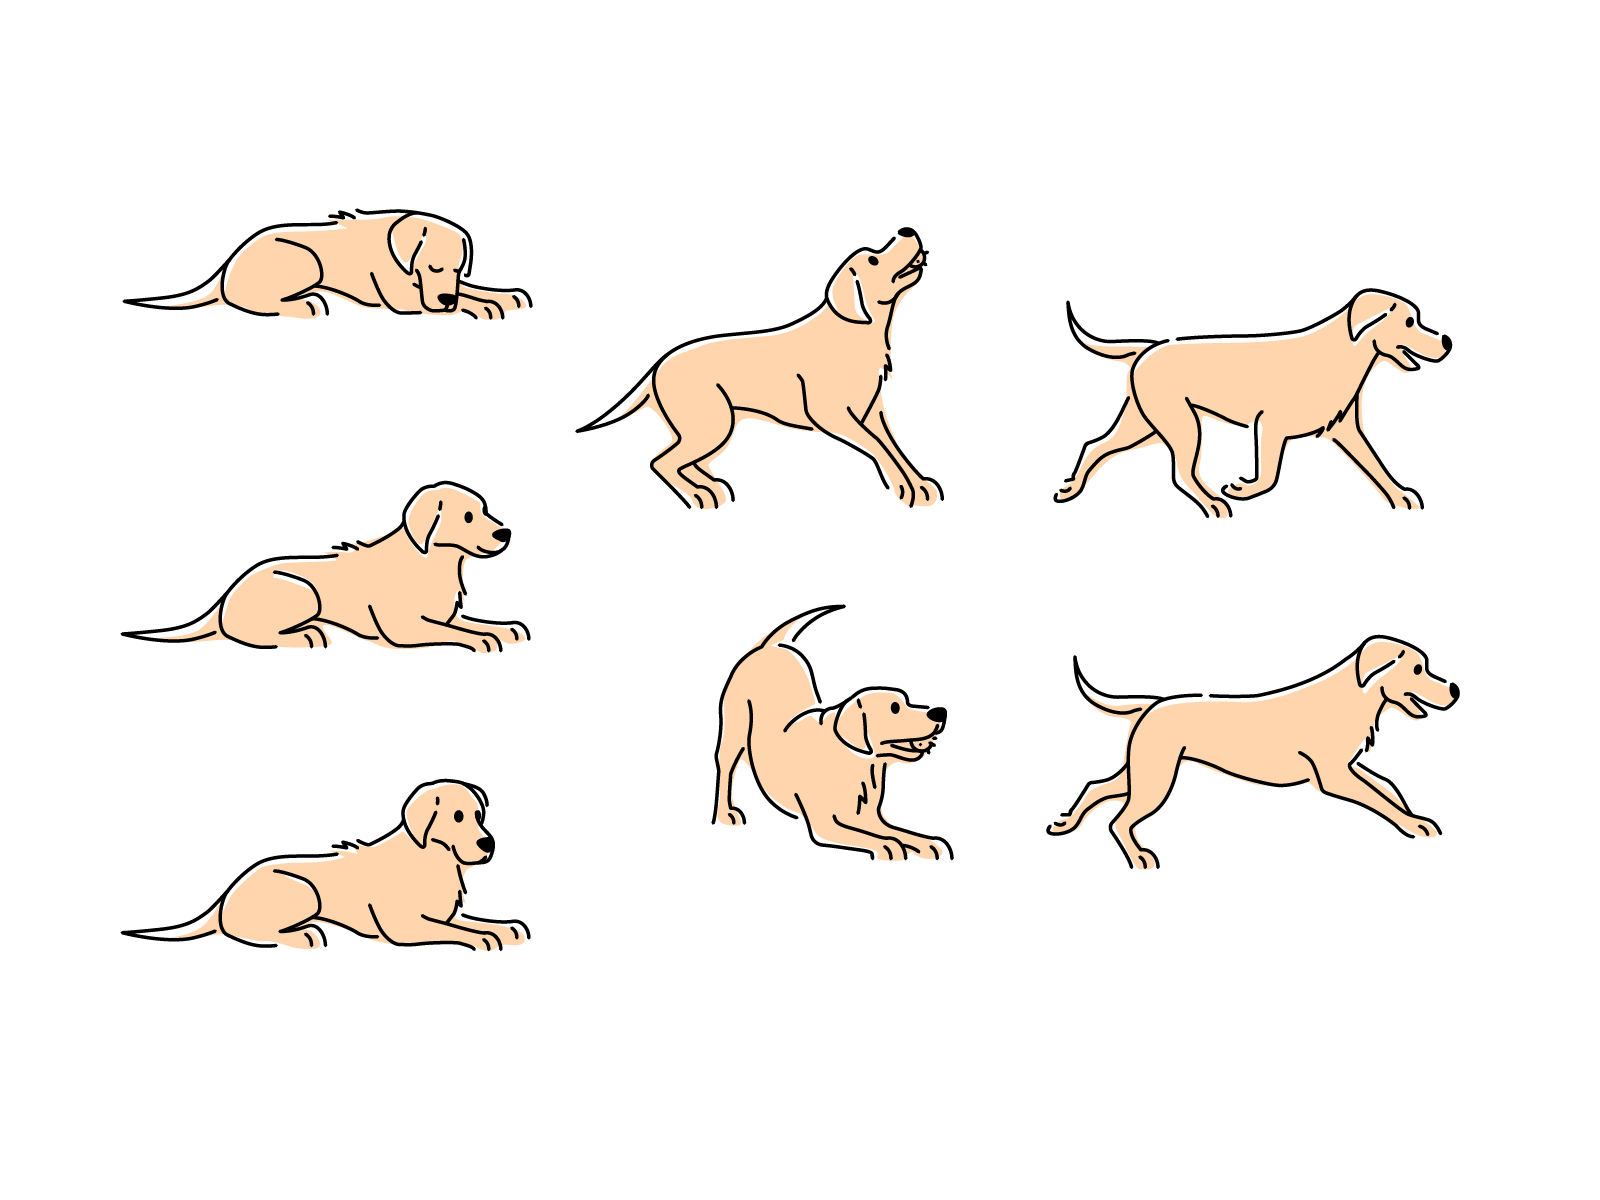 Illustrations dog poses by Tanya Buhinskaya on Dribbble